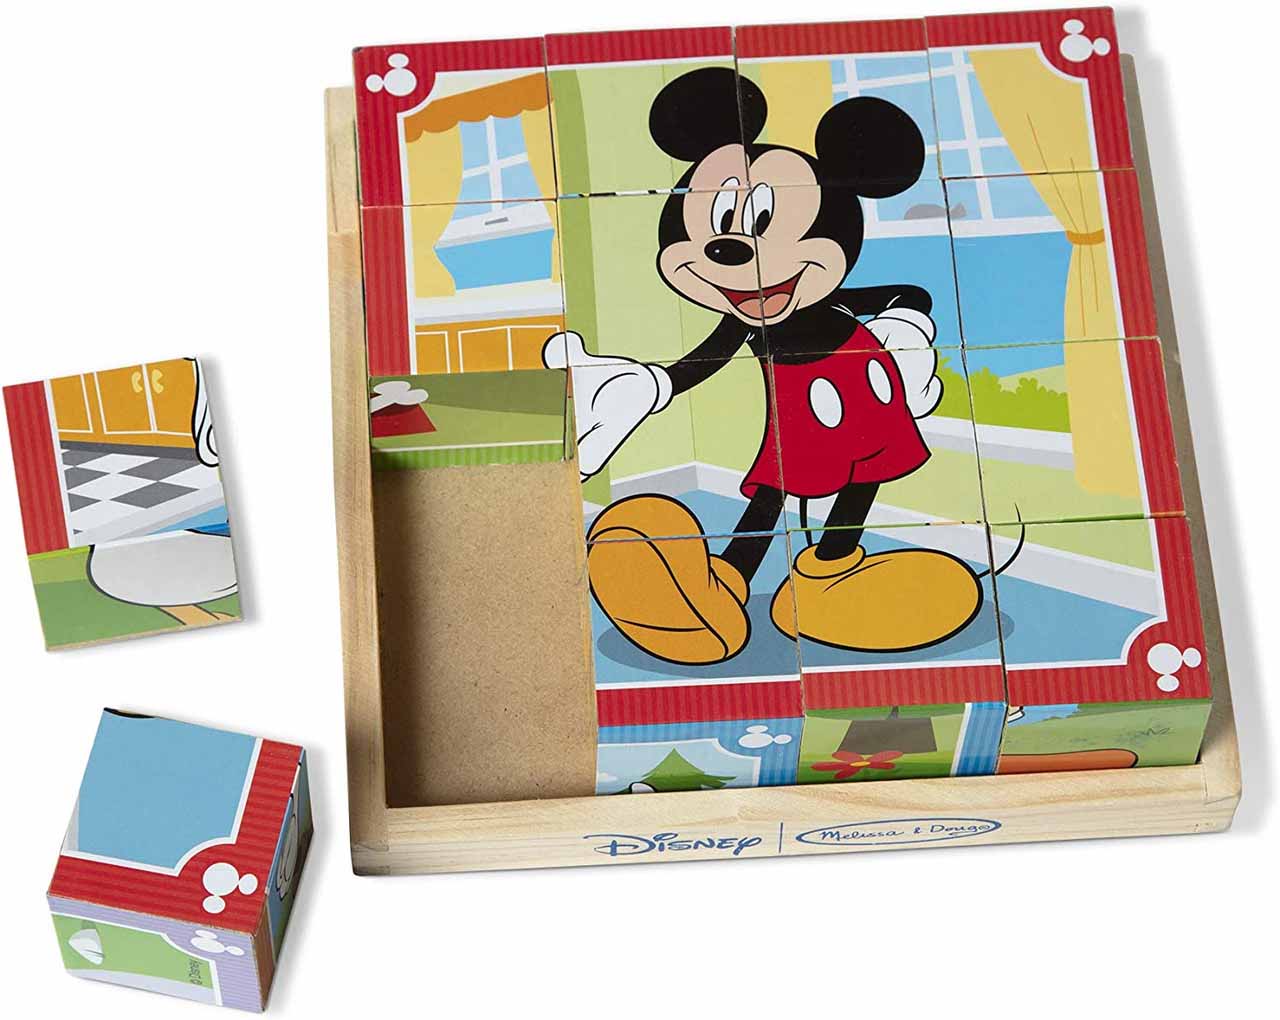 Miki Mouse - ePuzzle photo puzzle